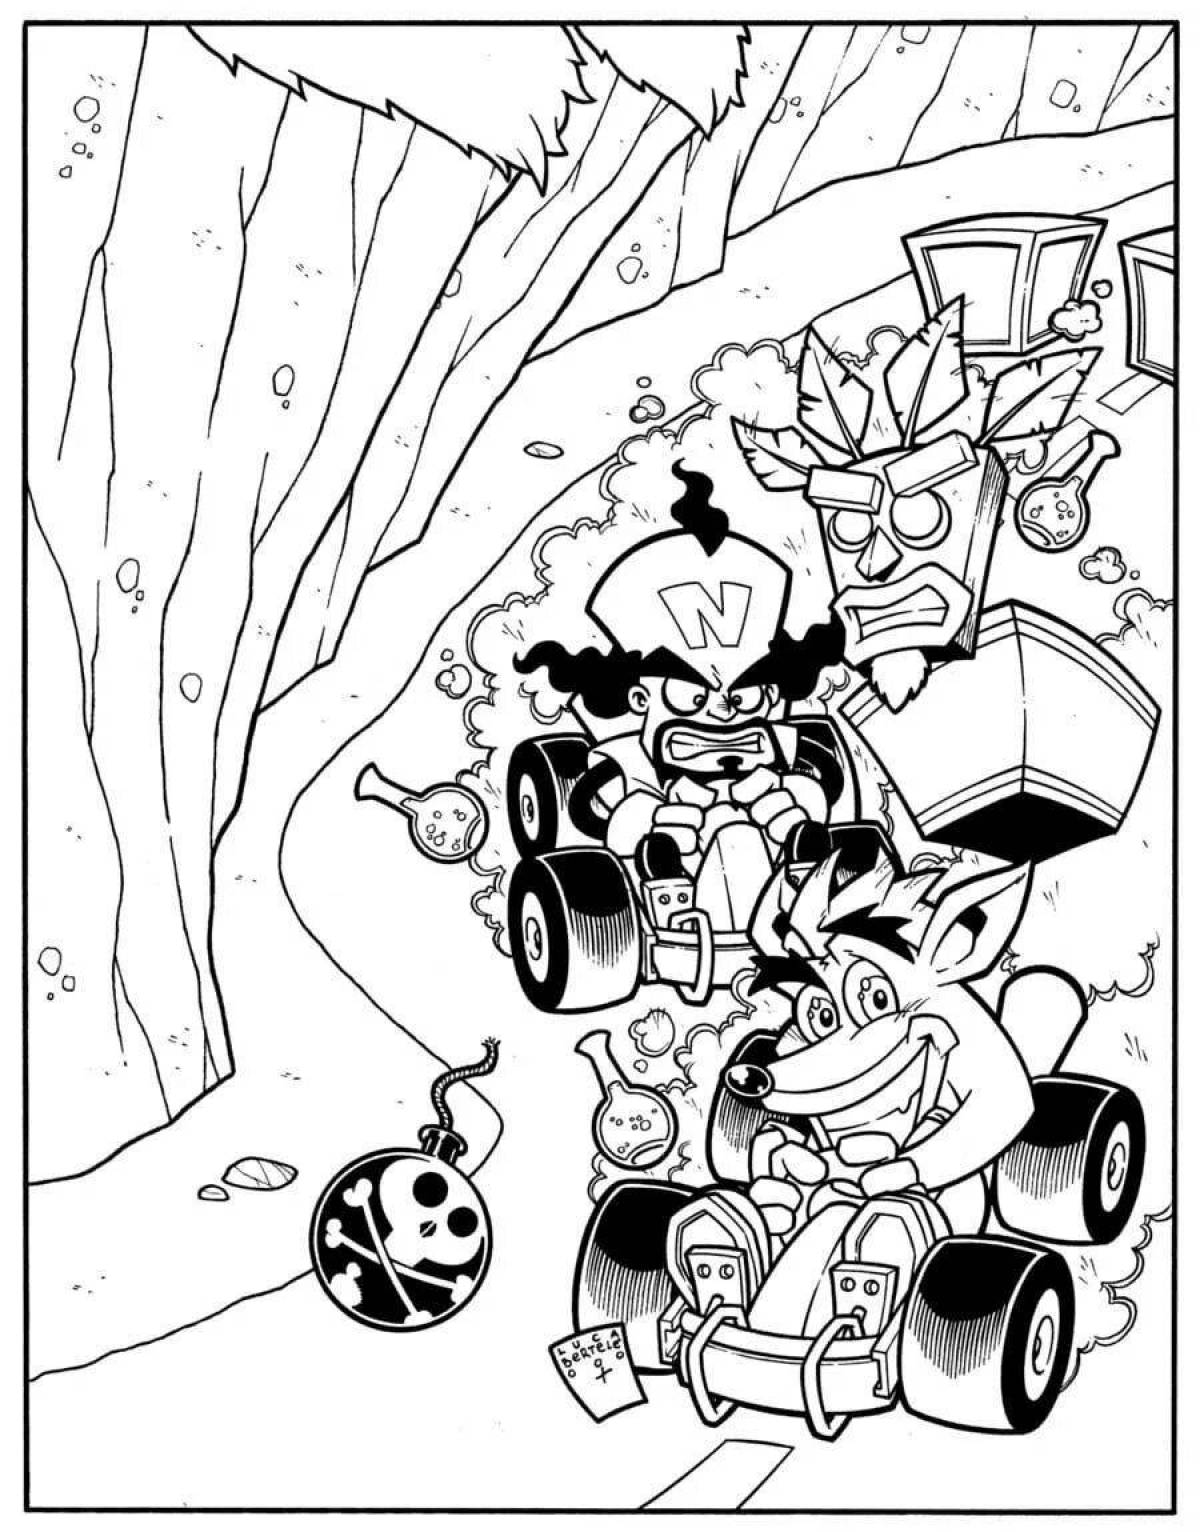 Crash Bandicoot #3